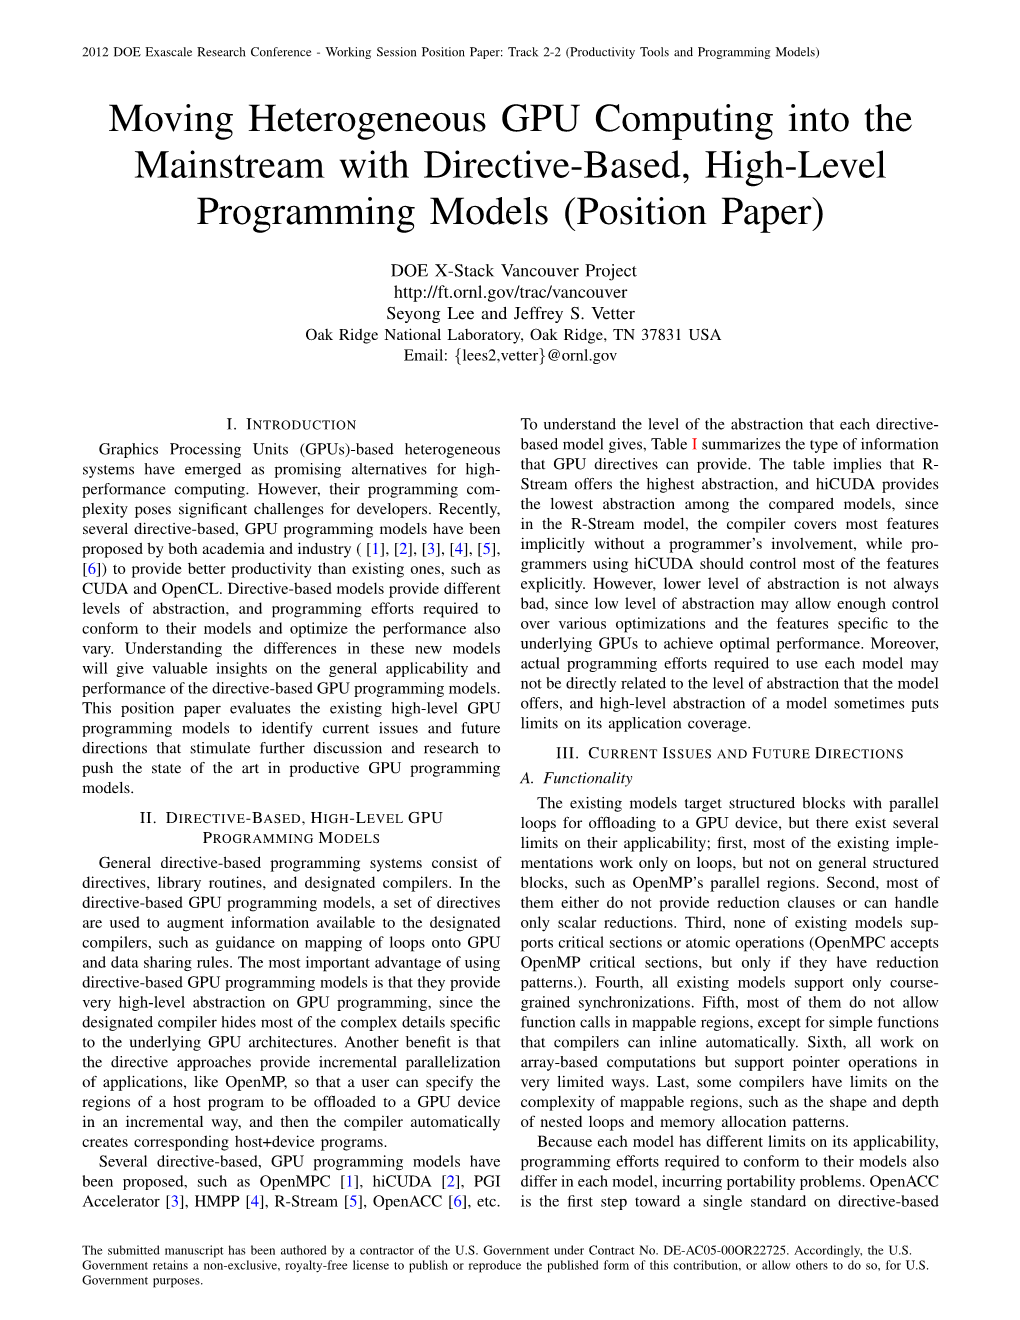 Directive-Based, High-Level GPU Programming Models